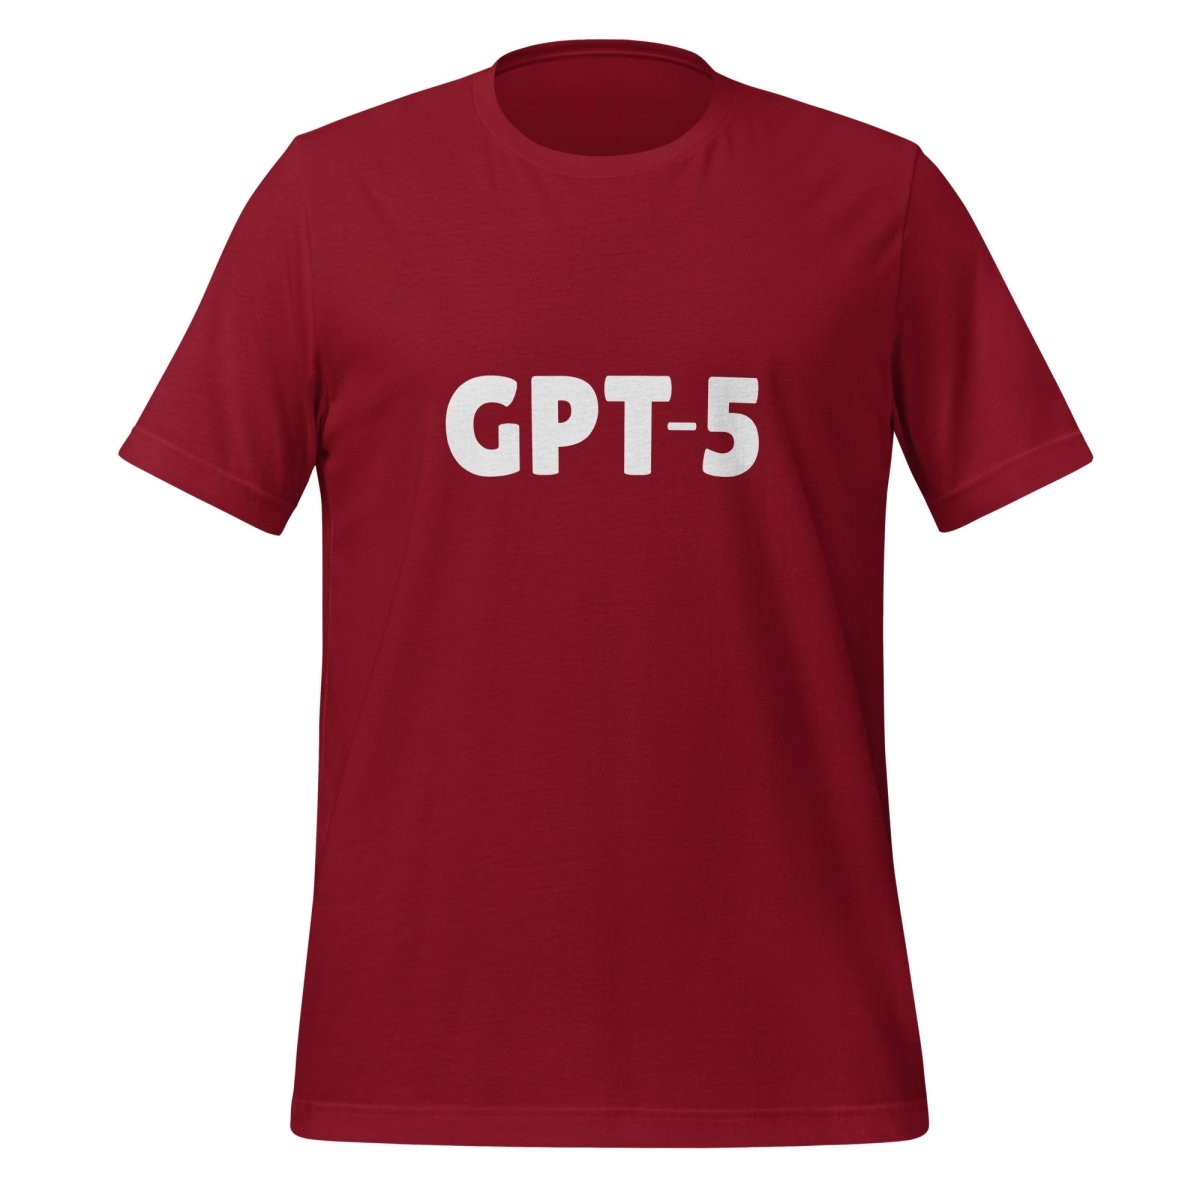 GPT - 5 T - Shirt 2 (unisex) - Cardinal - AI Store